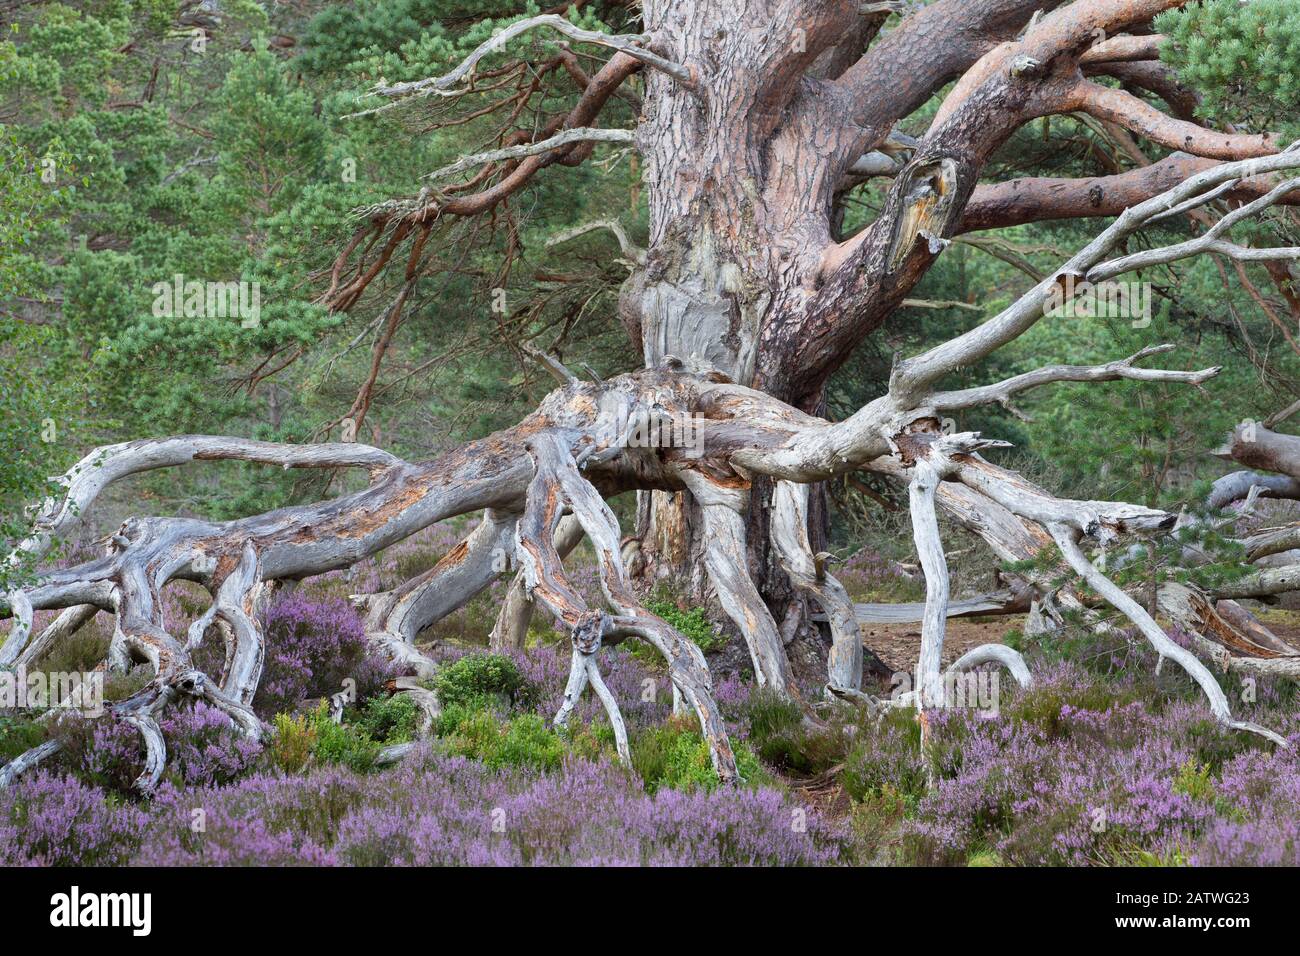 Pino antico scozzese (Pinus sylvestris) tra fioritura erica comune / Ling (Calluna vulgaris). Rothiemurchus Forest, Cairngorms National Park, Scozia, Regno Unito. Foto Stock